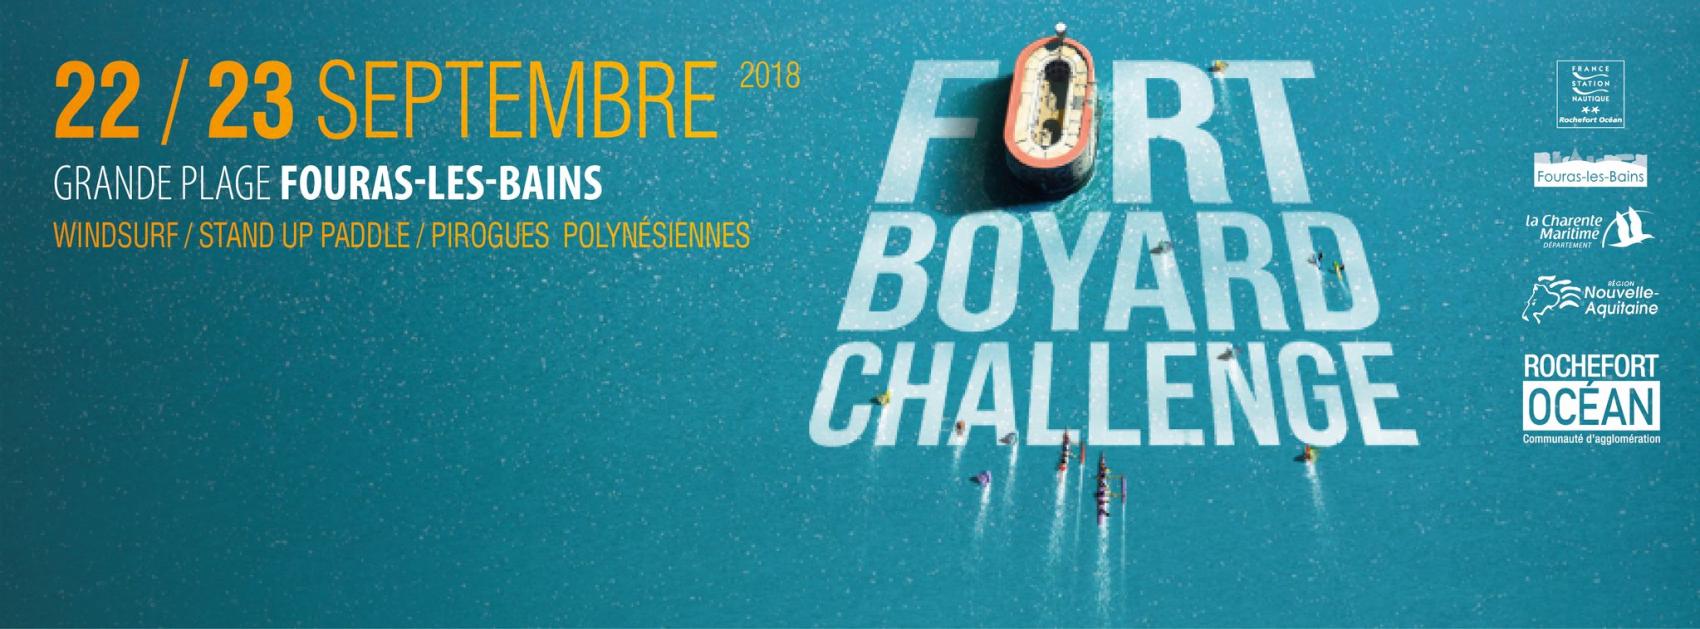 ‹‹ Fort Boyard Challenge ›› - Samedi 22 et dimanche 23 septembre 2018